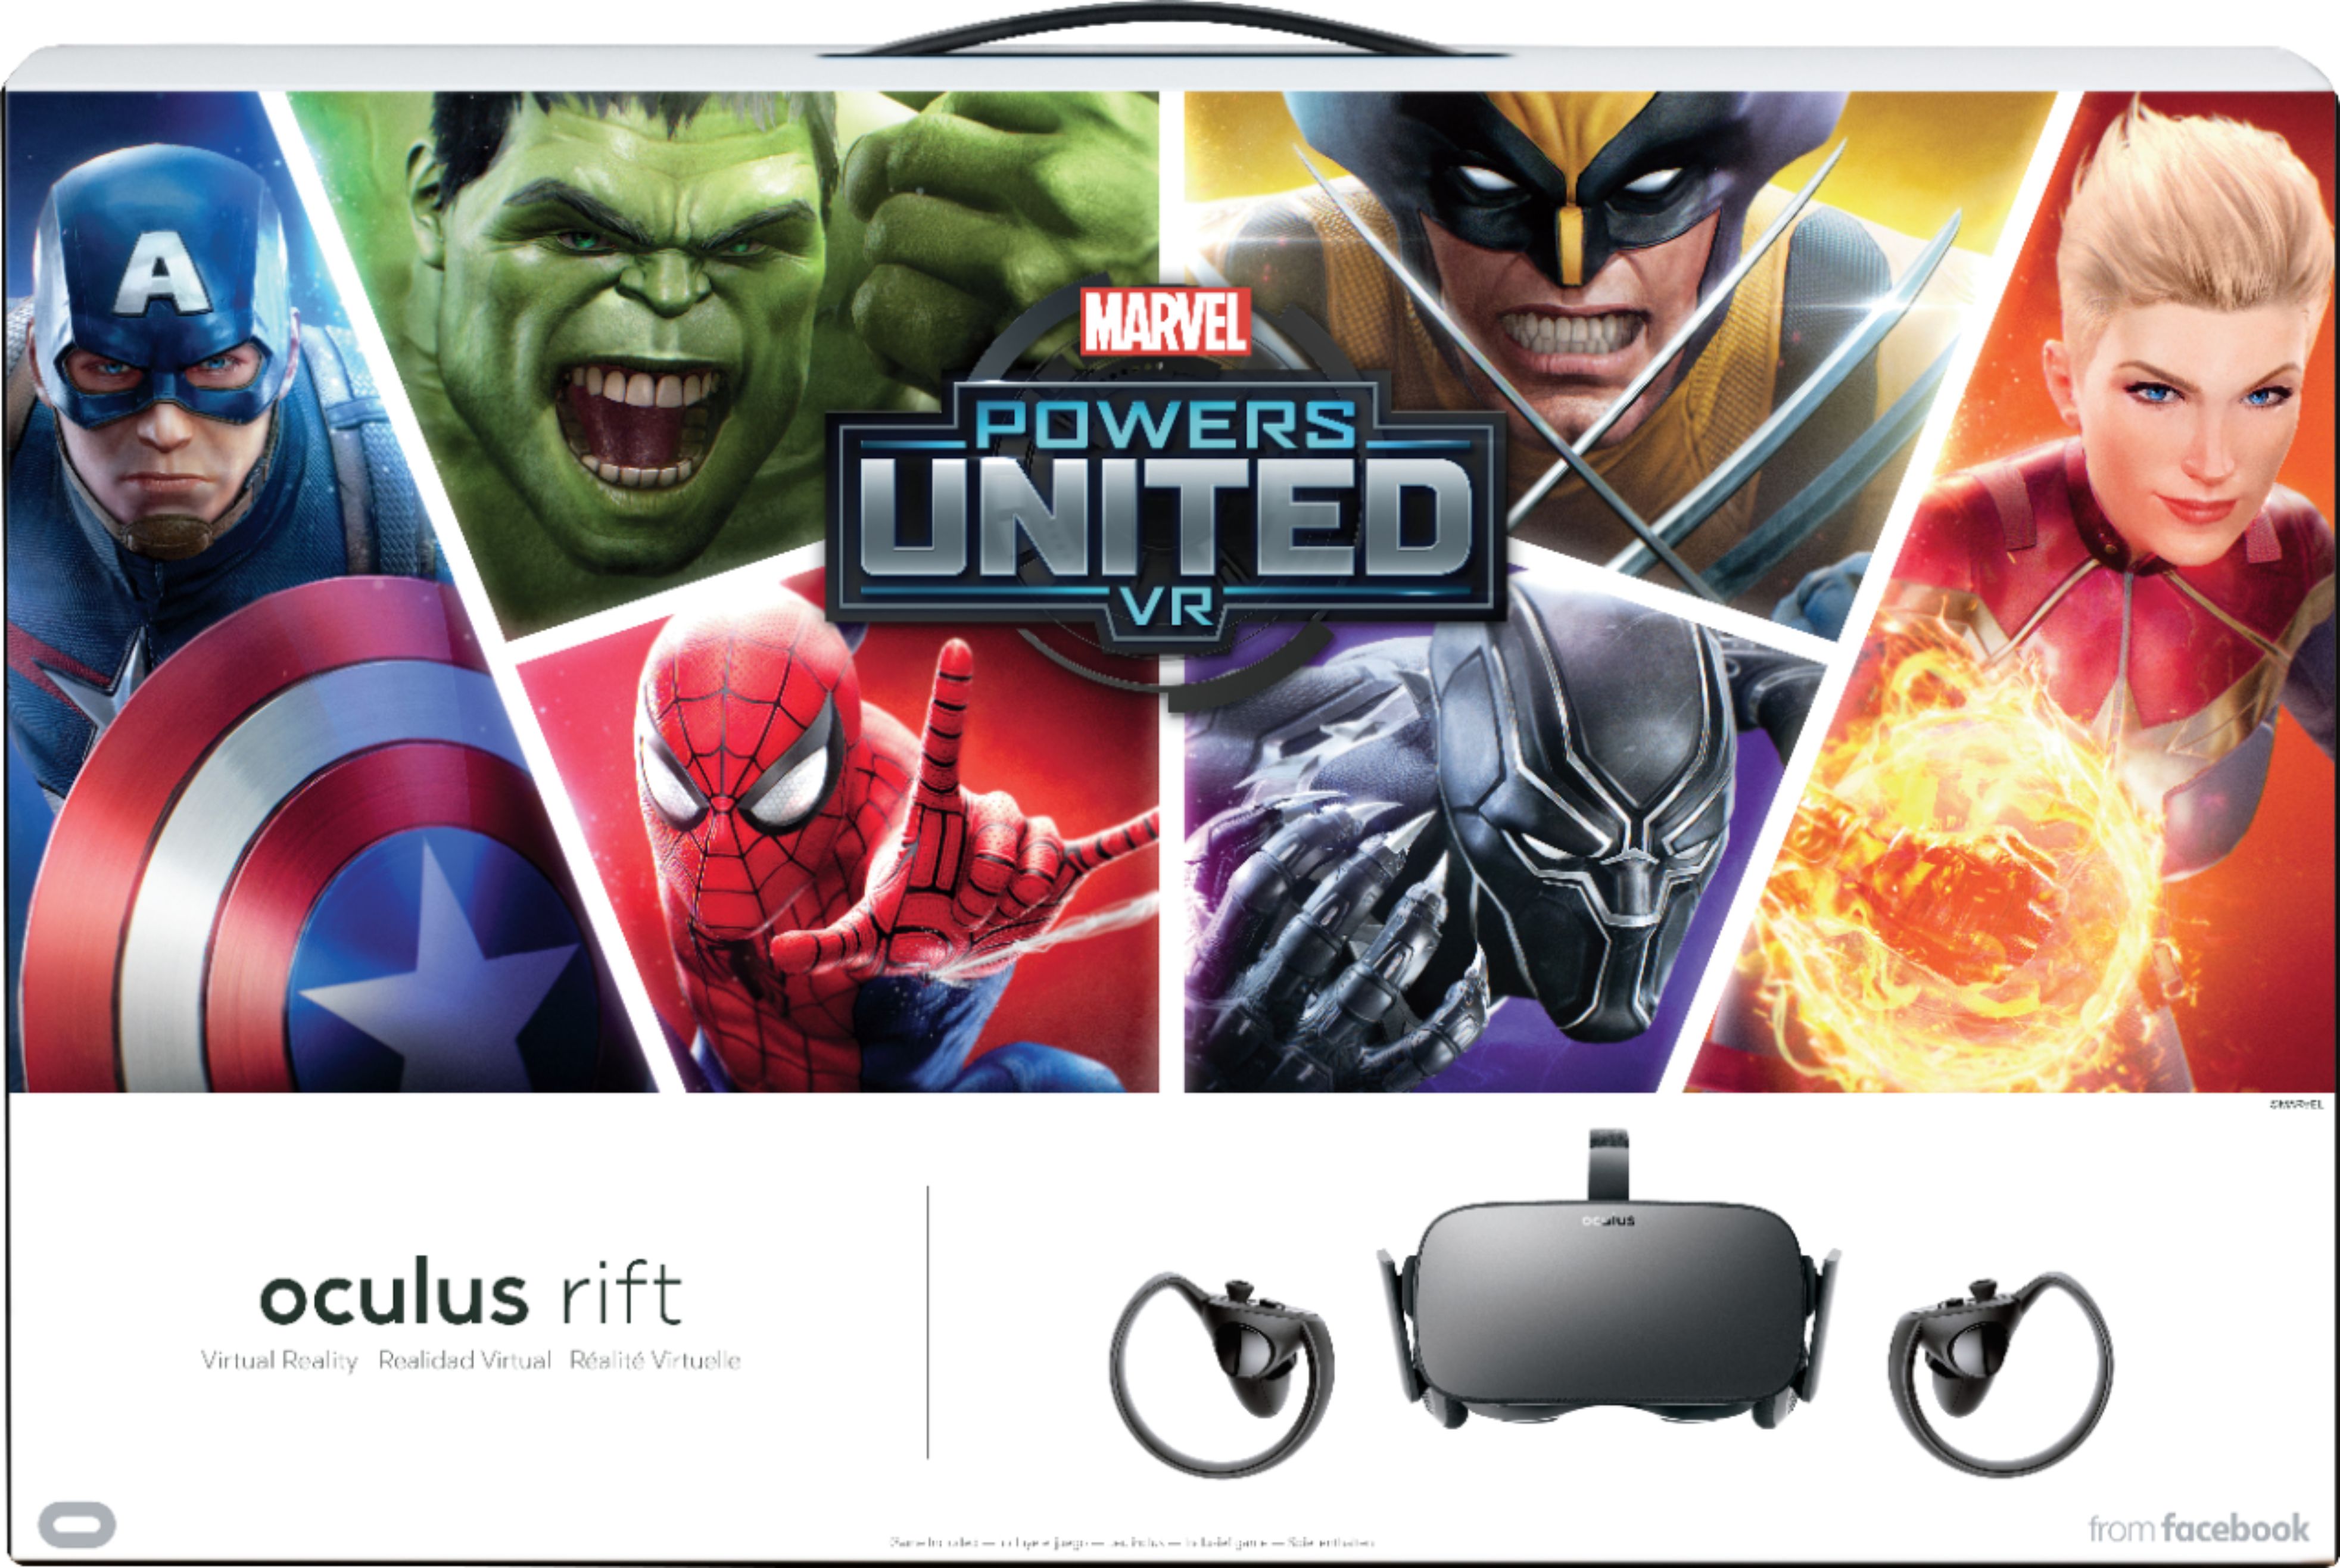 oculus rift marvel powers united